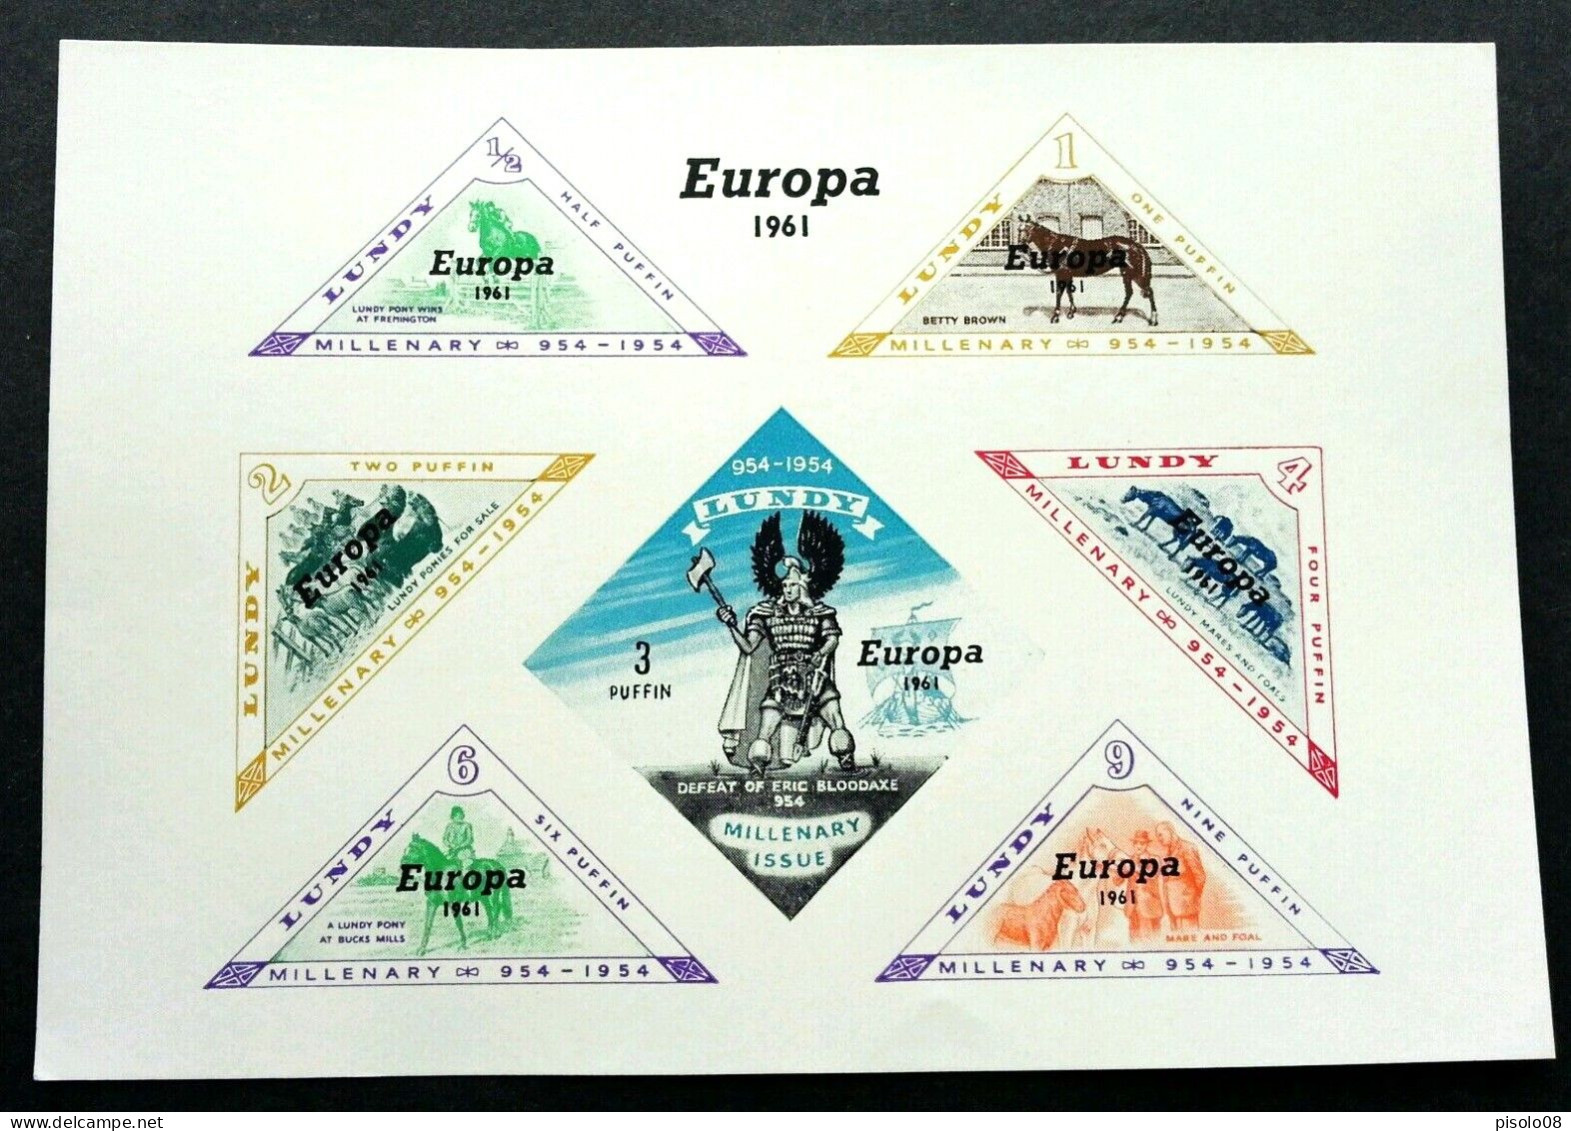 EUROPA JUGOSLAVIA 1961 LUNDY MILLENARY 954-1954 FOGLIETTO - Blocs-feuillets